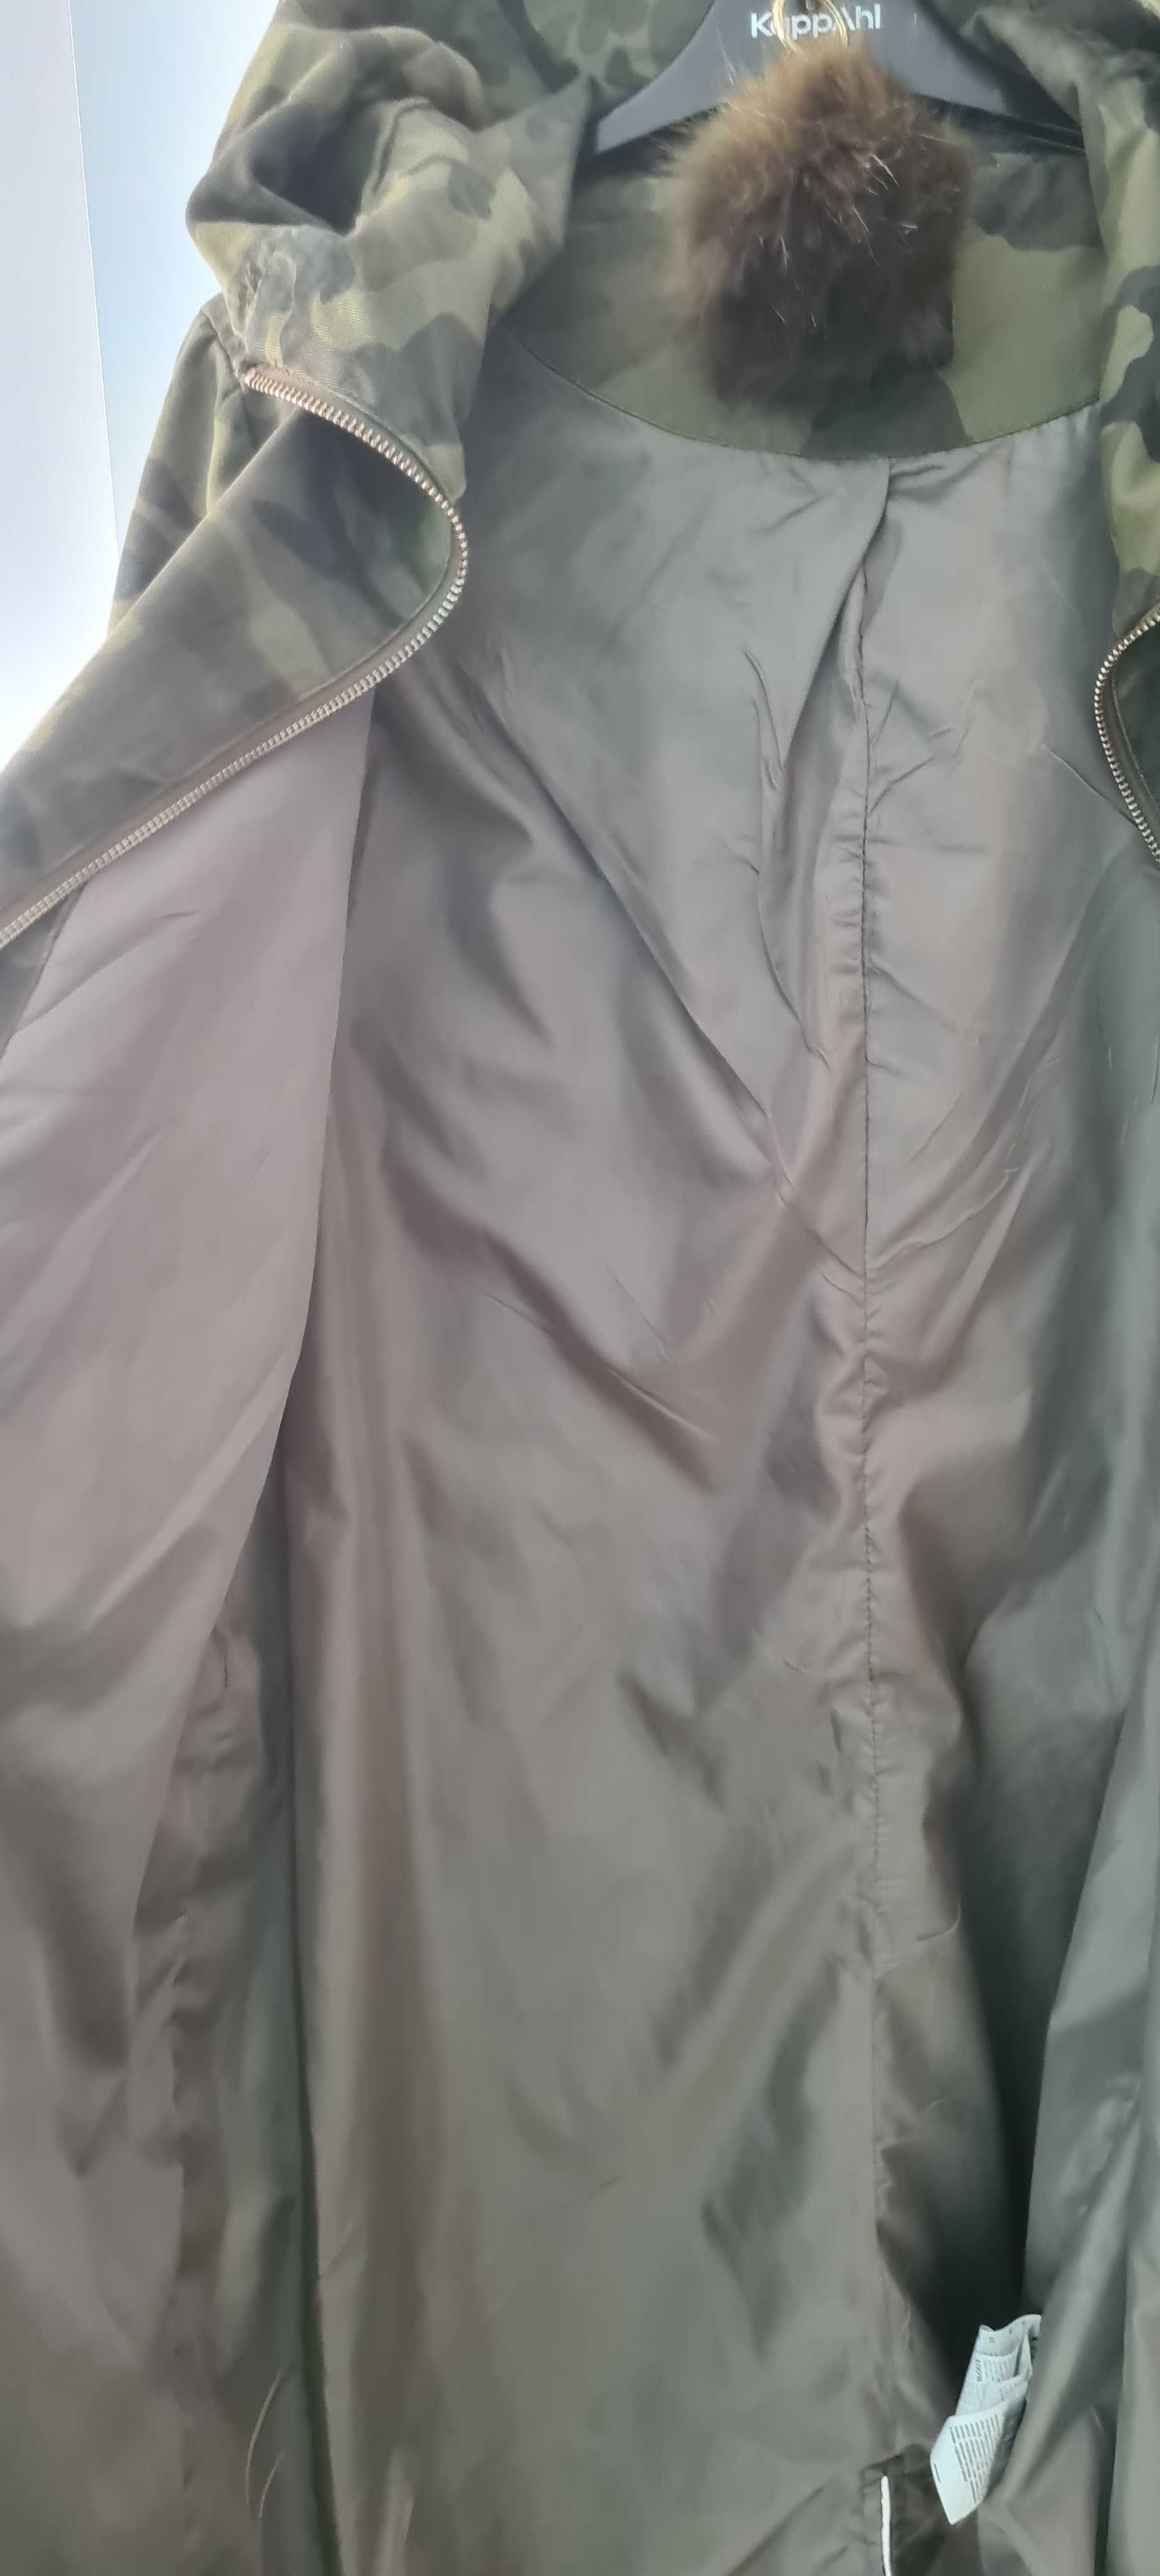 Parka płaszcz damski płaszczyk Mohito 42 L XL jak nowy moro khaki